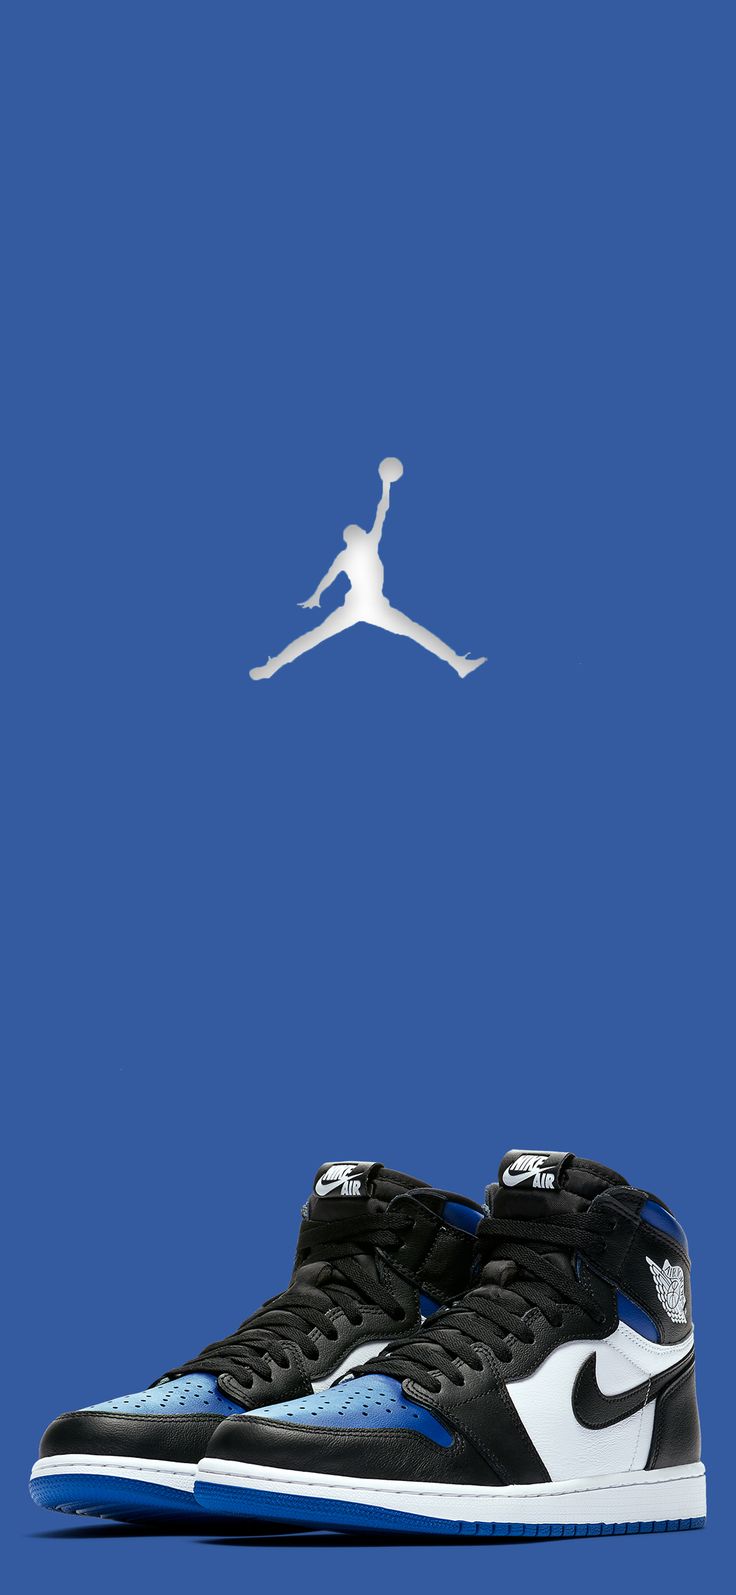 Air Jordan 1s Royal Blue Nike wallpaper Shoes wallpaper 736x1595